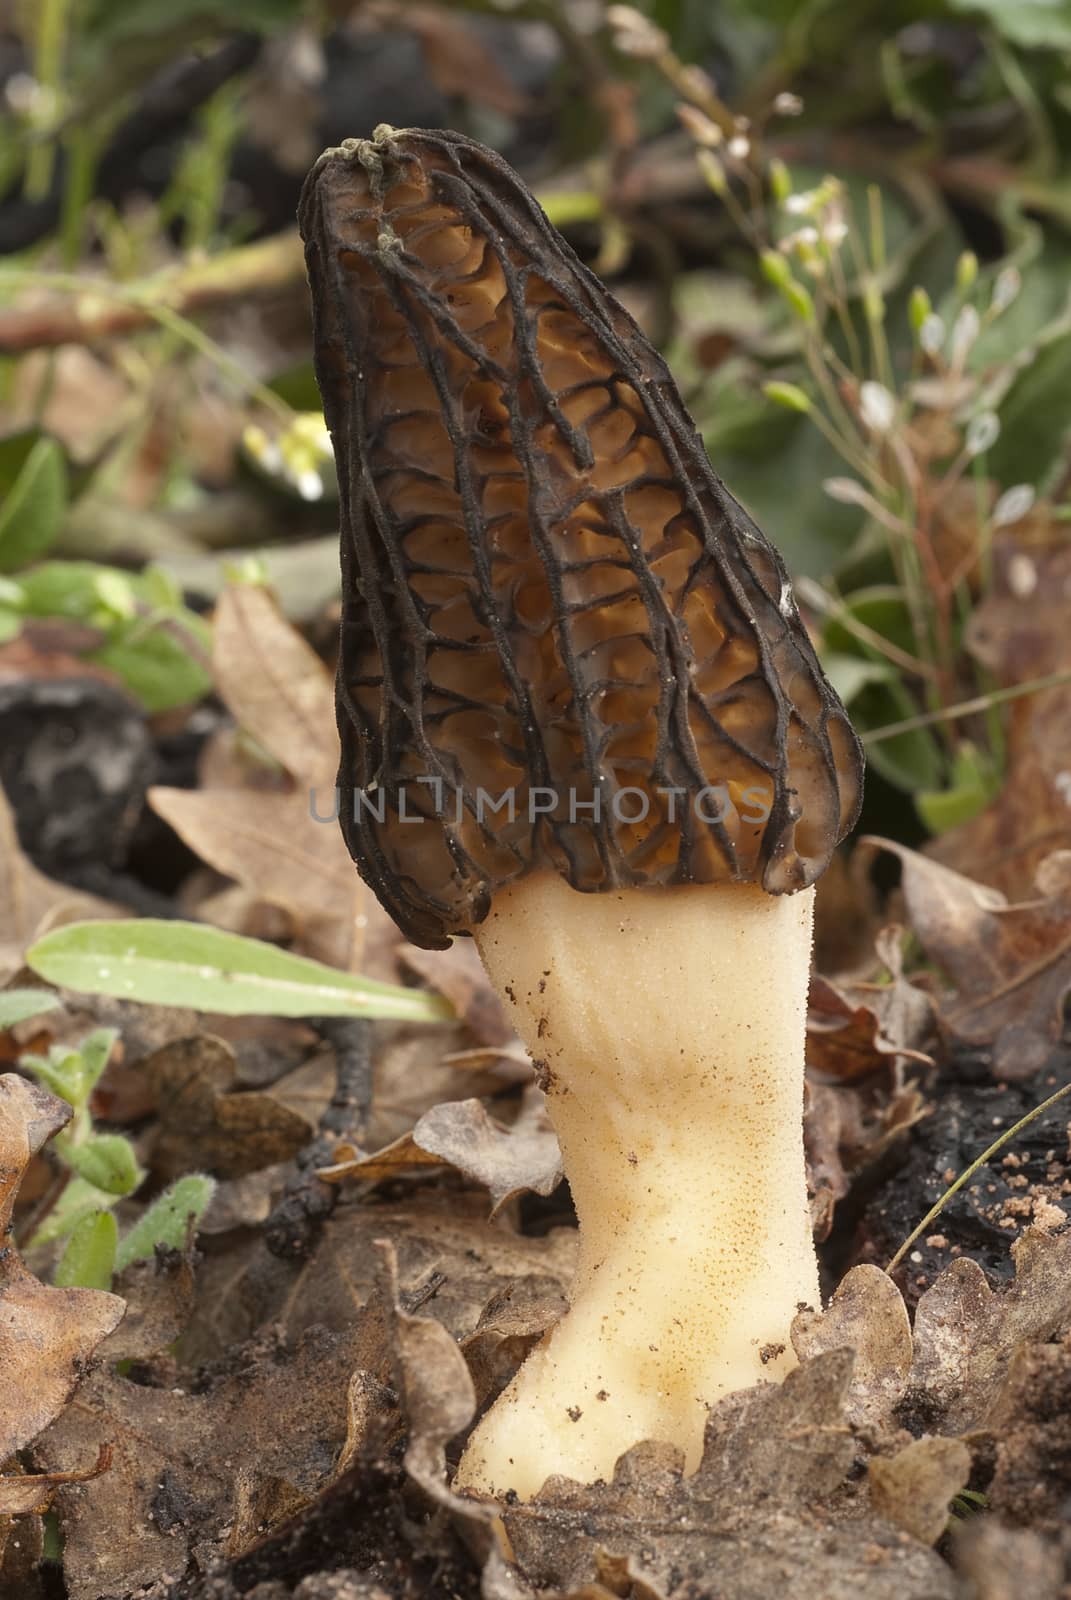 Common Morel Mushroom. Morchella esculenta by jalonsohu@gmail.com